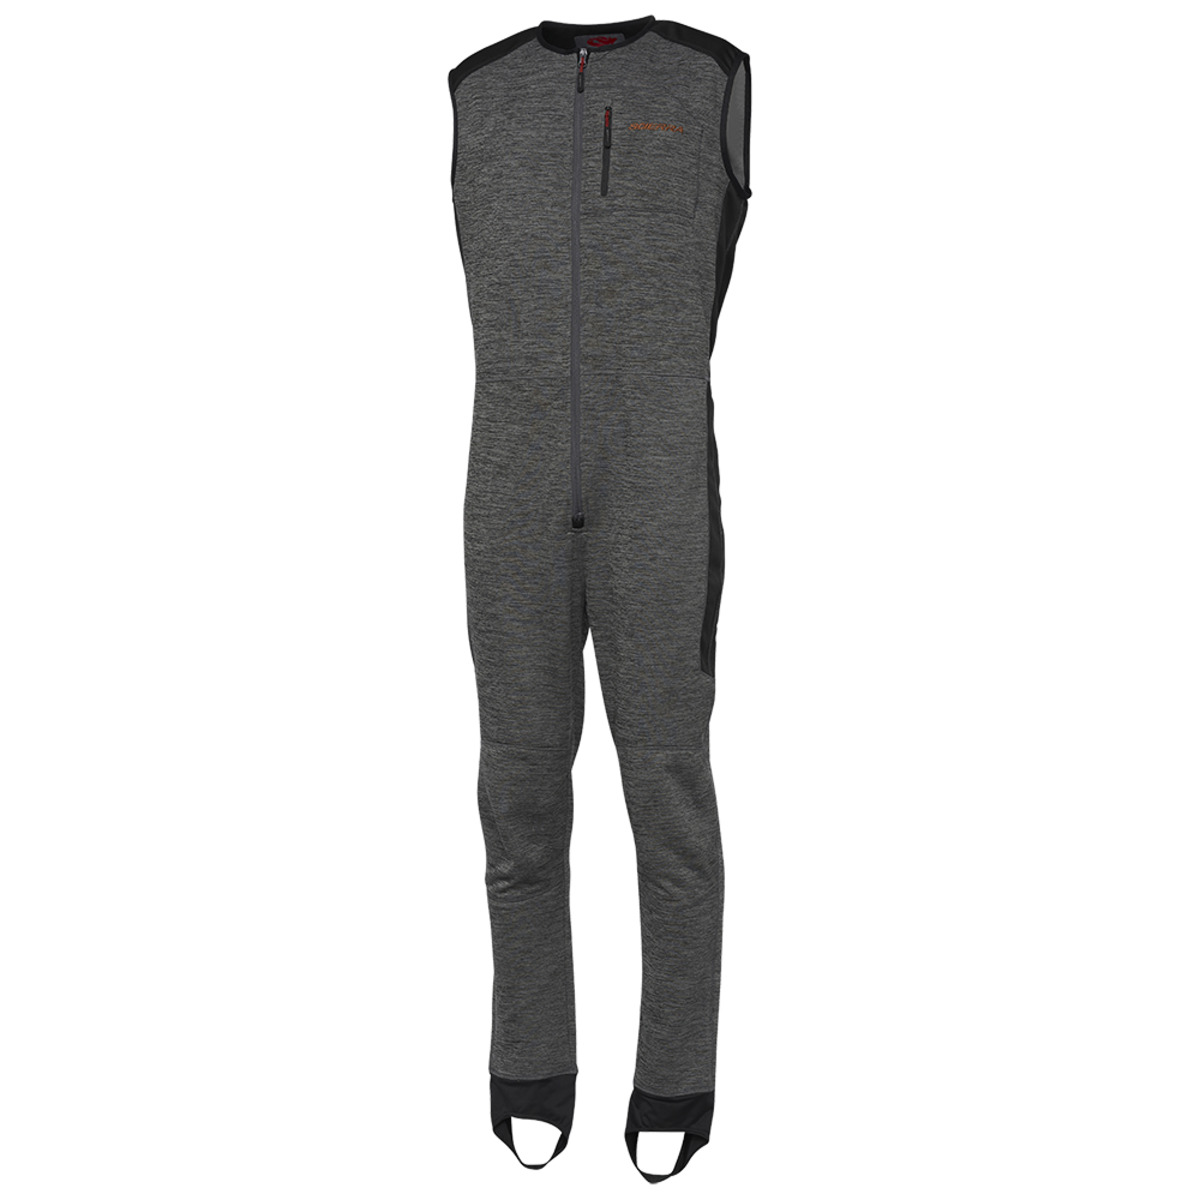 Scierra Insulated Body Suit - XXL PEWTER GREY MELANGE